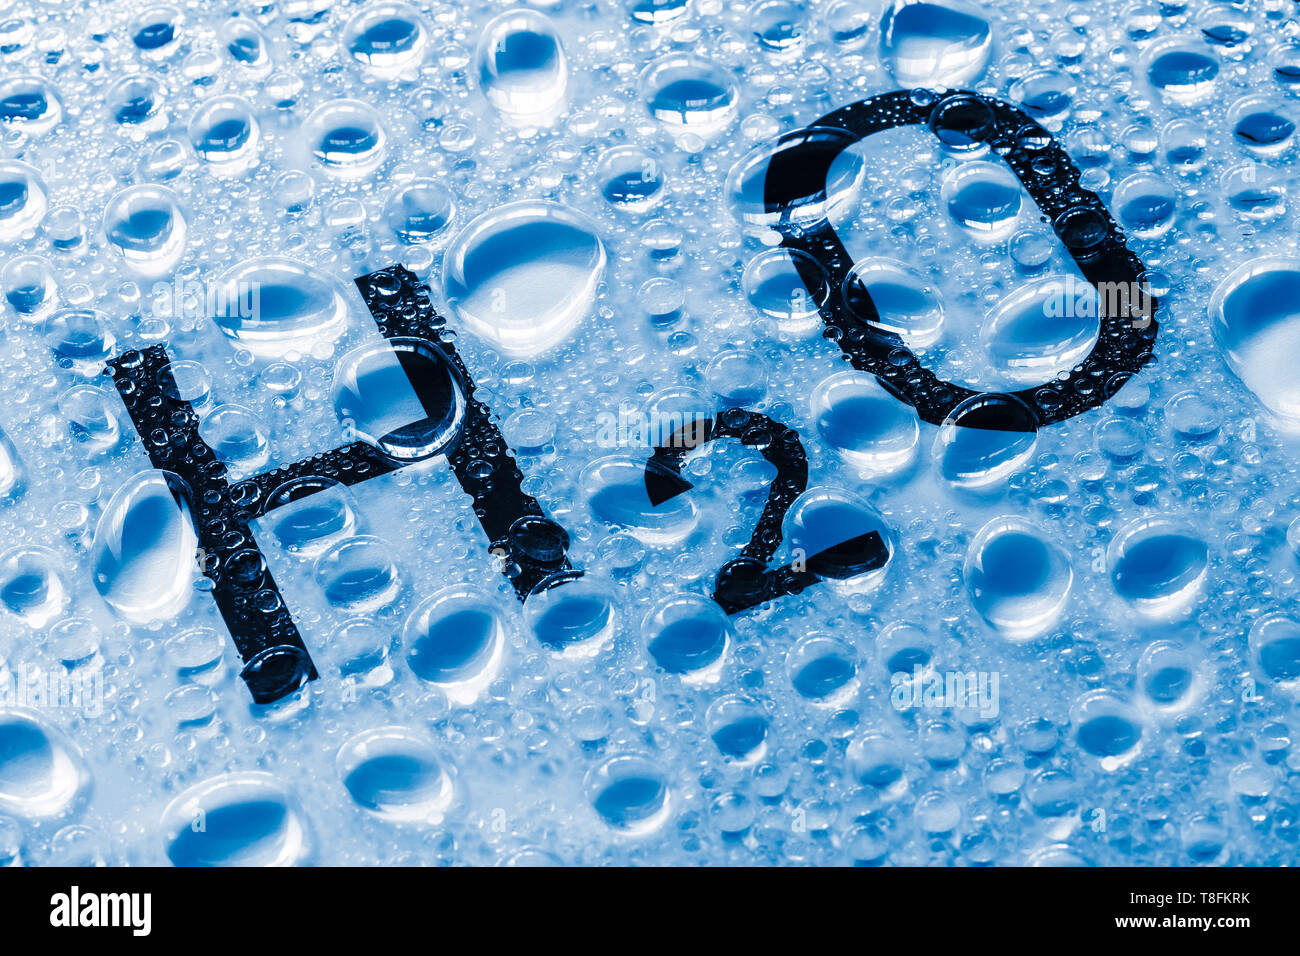 La fórmula química del agua con gotas en el cristal. Concepto de agua pura. Los recursos naturales. Foto de stock